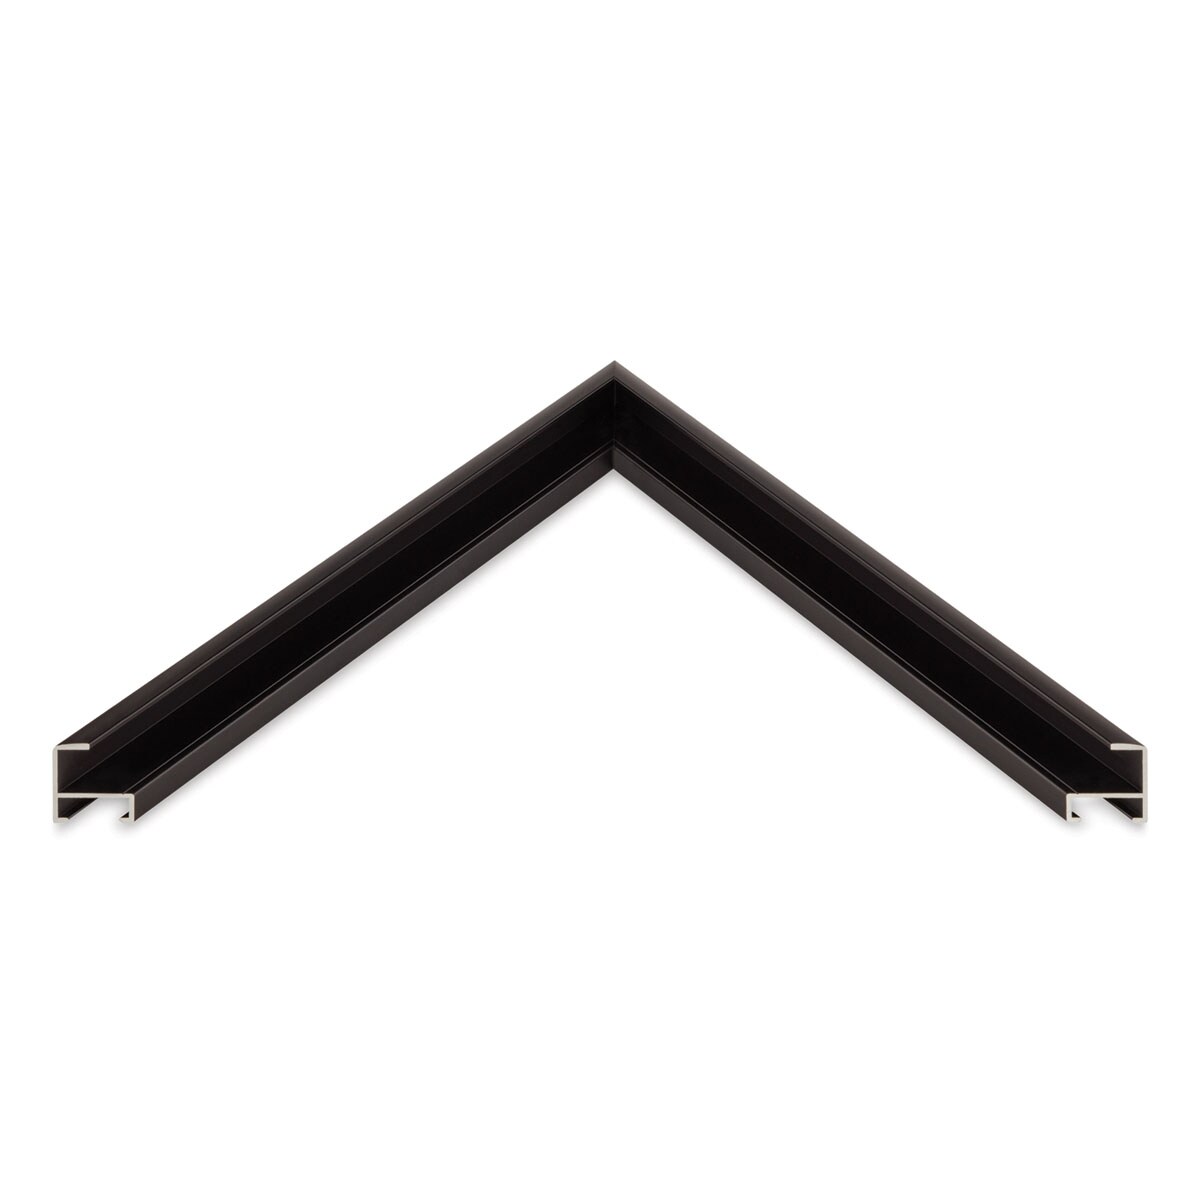 Nielsen Bainbridge Metal Frame Kit-21&#x201D; x 7/16&#x201D;, Black, 2 Bars